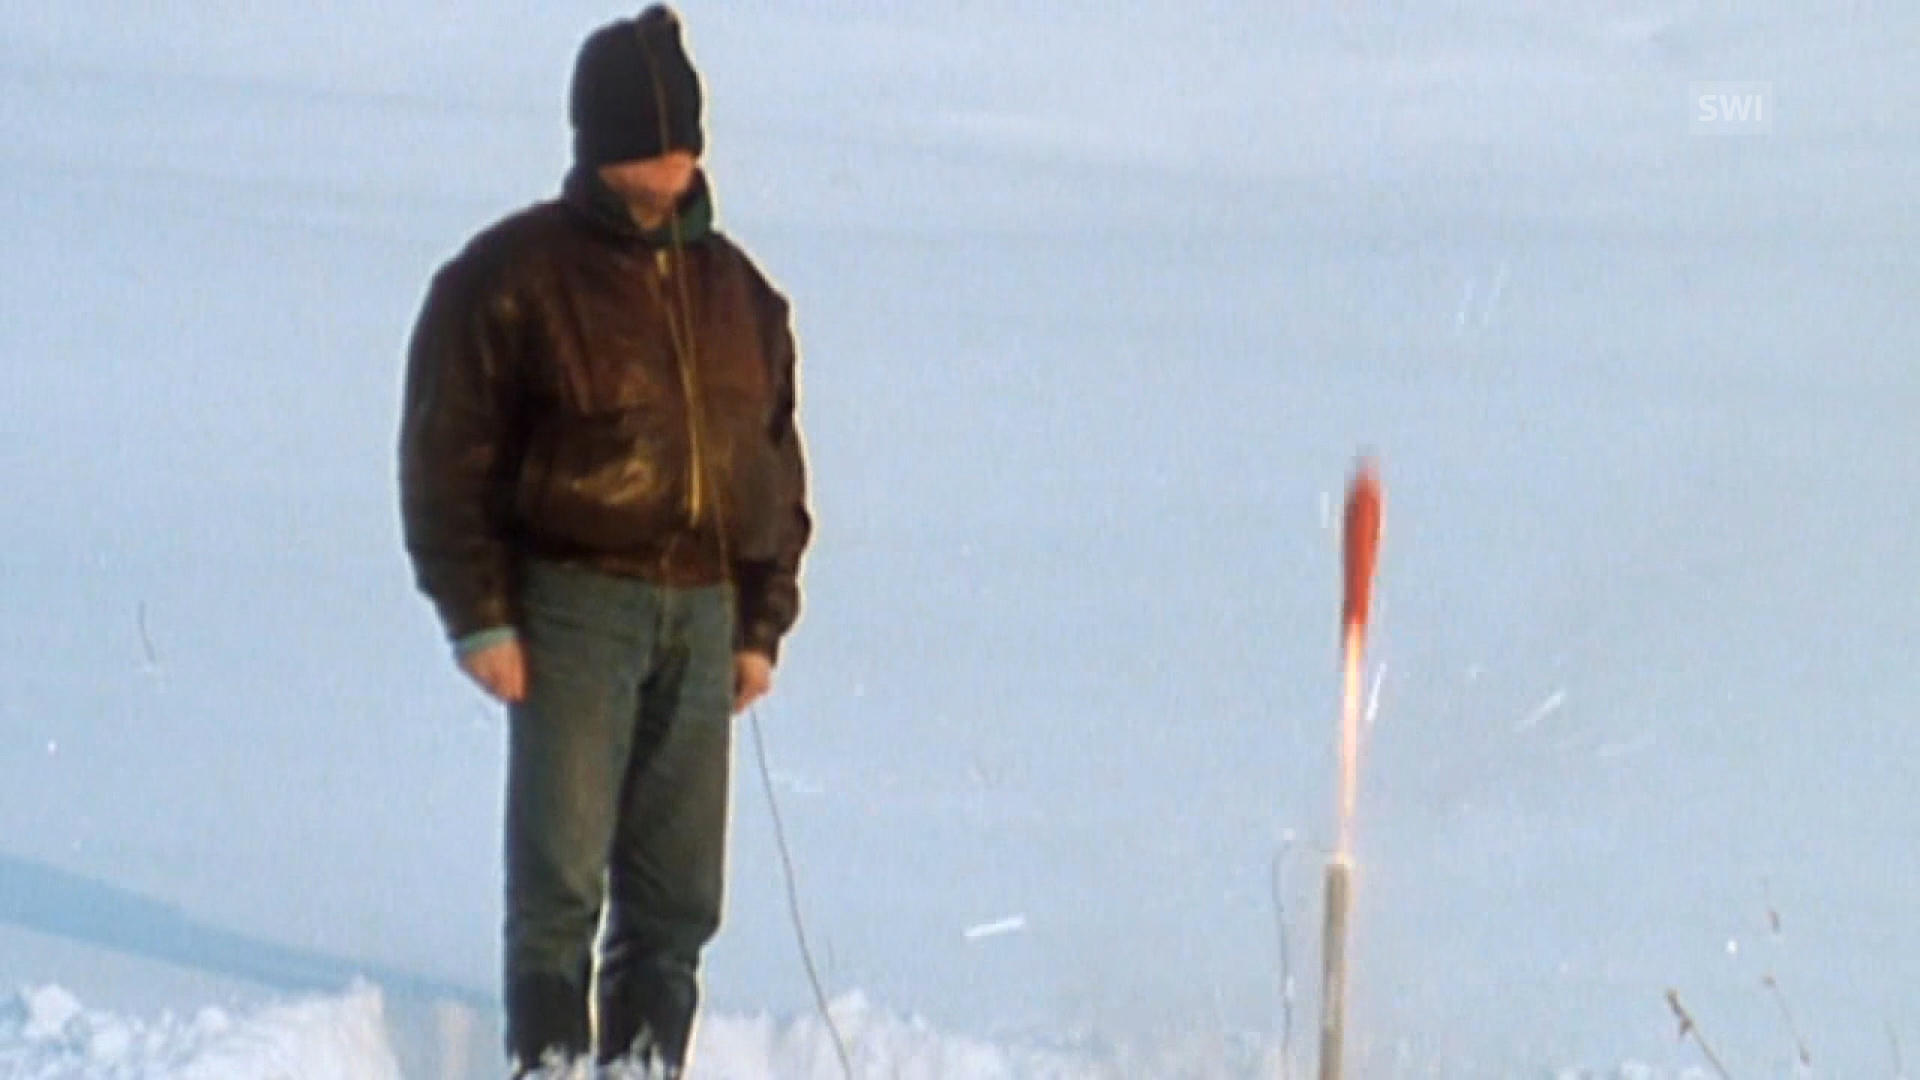 Video still of man standing in snowy field, blindfolded